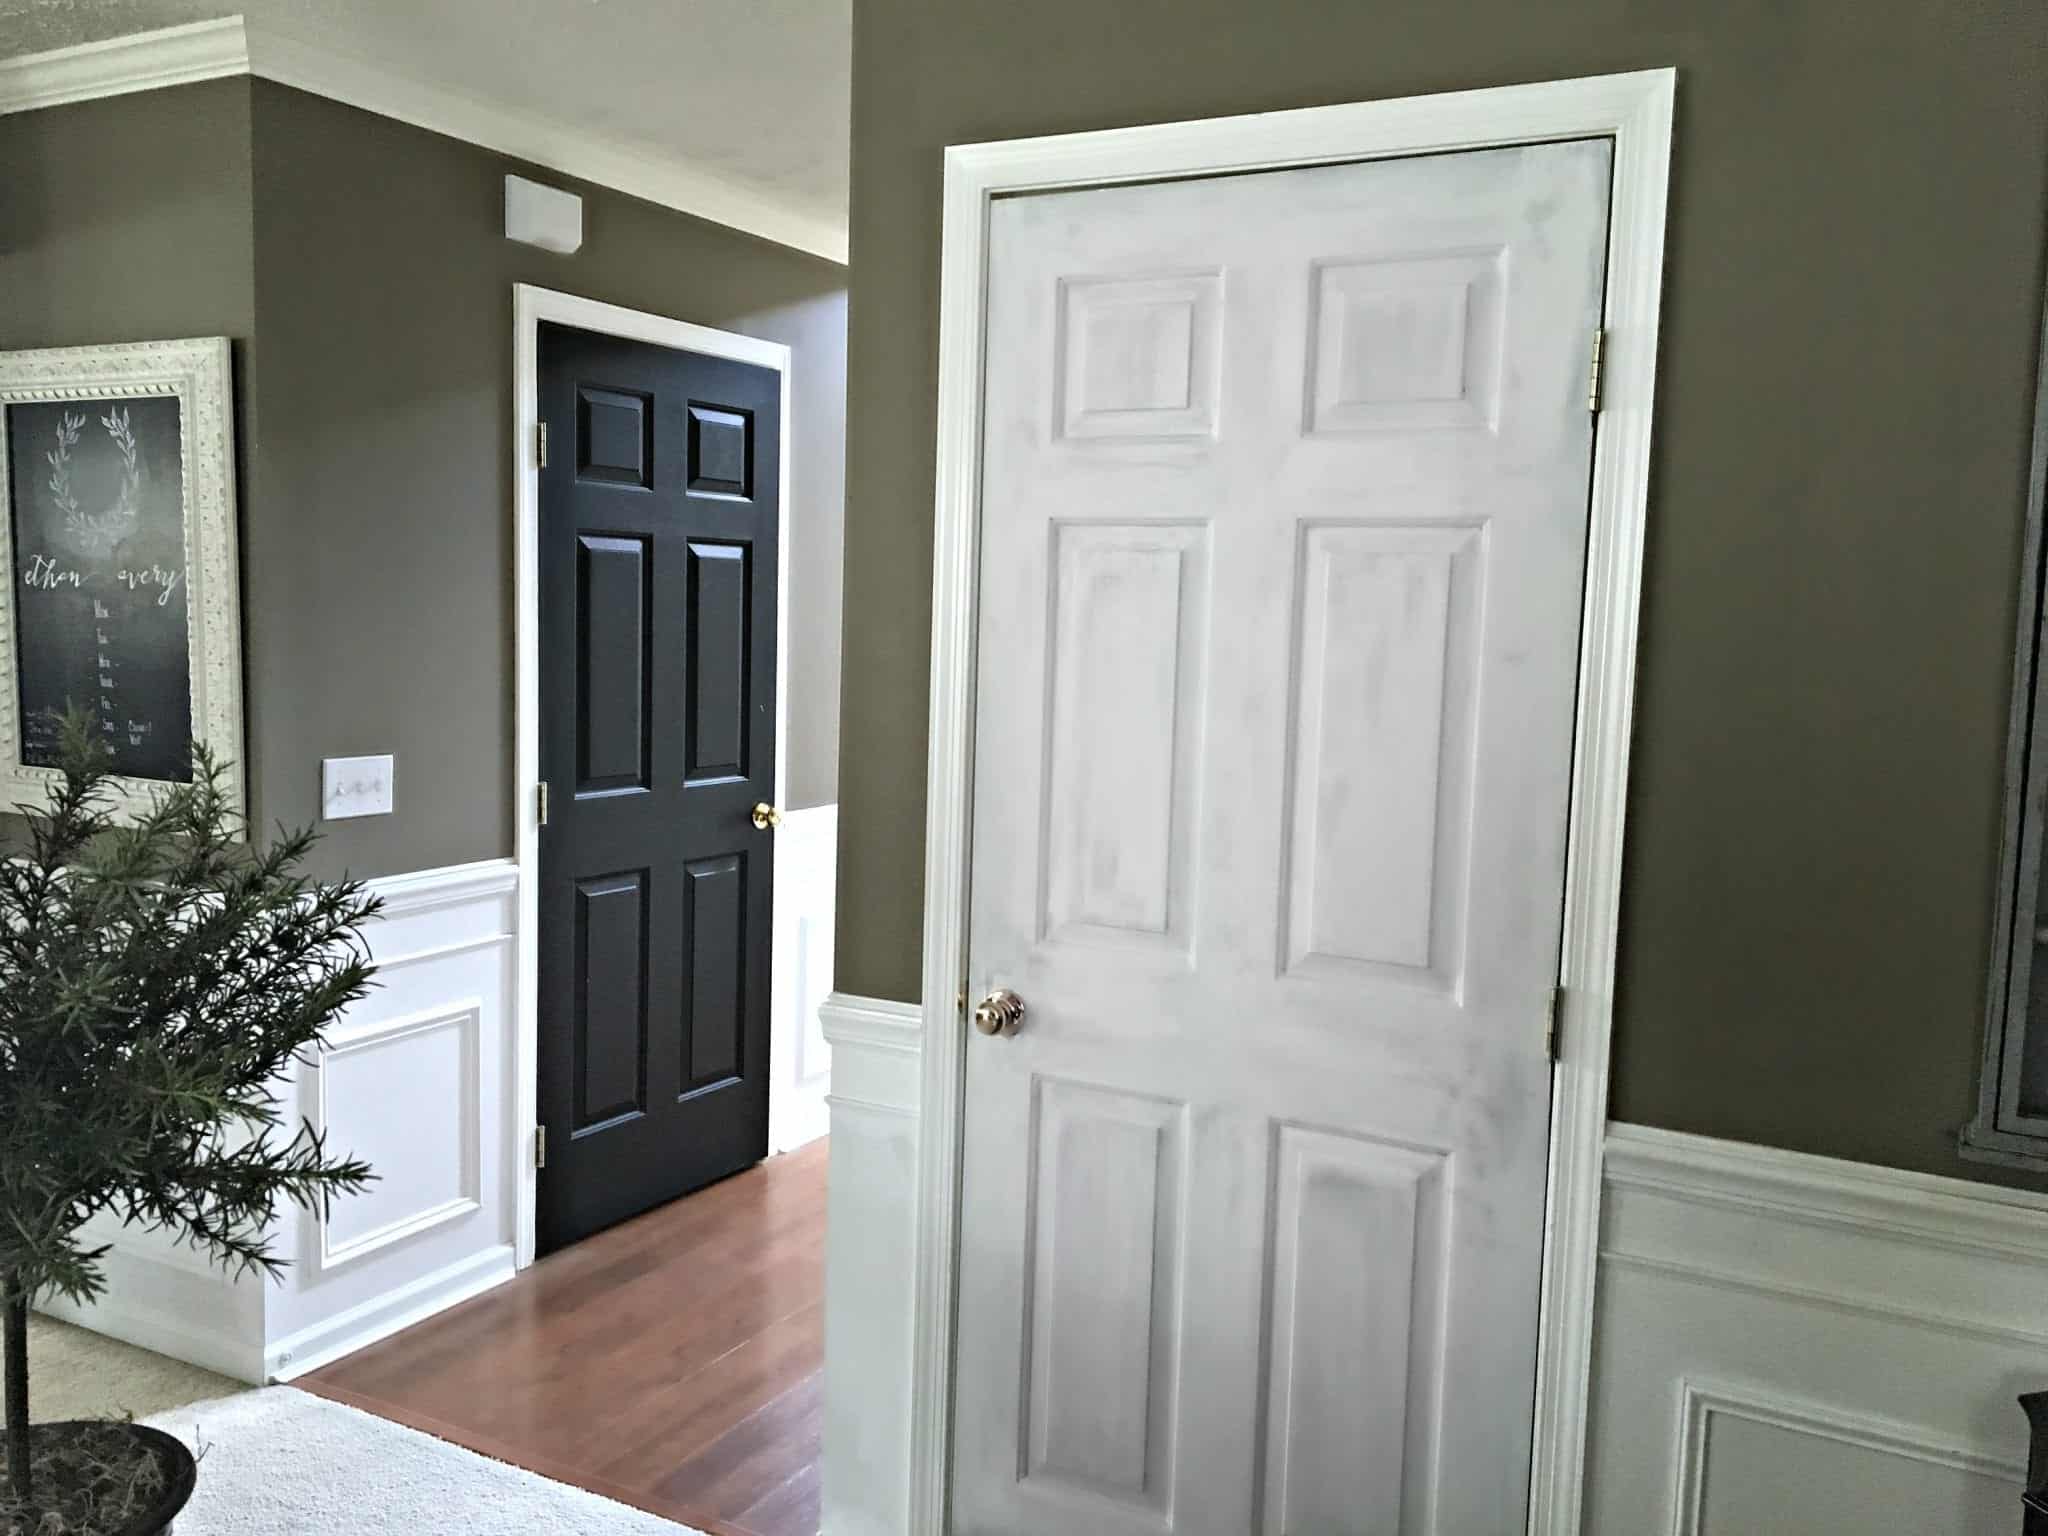 photos of interior doors painted black